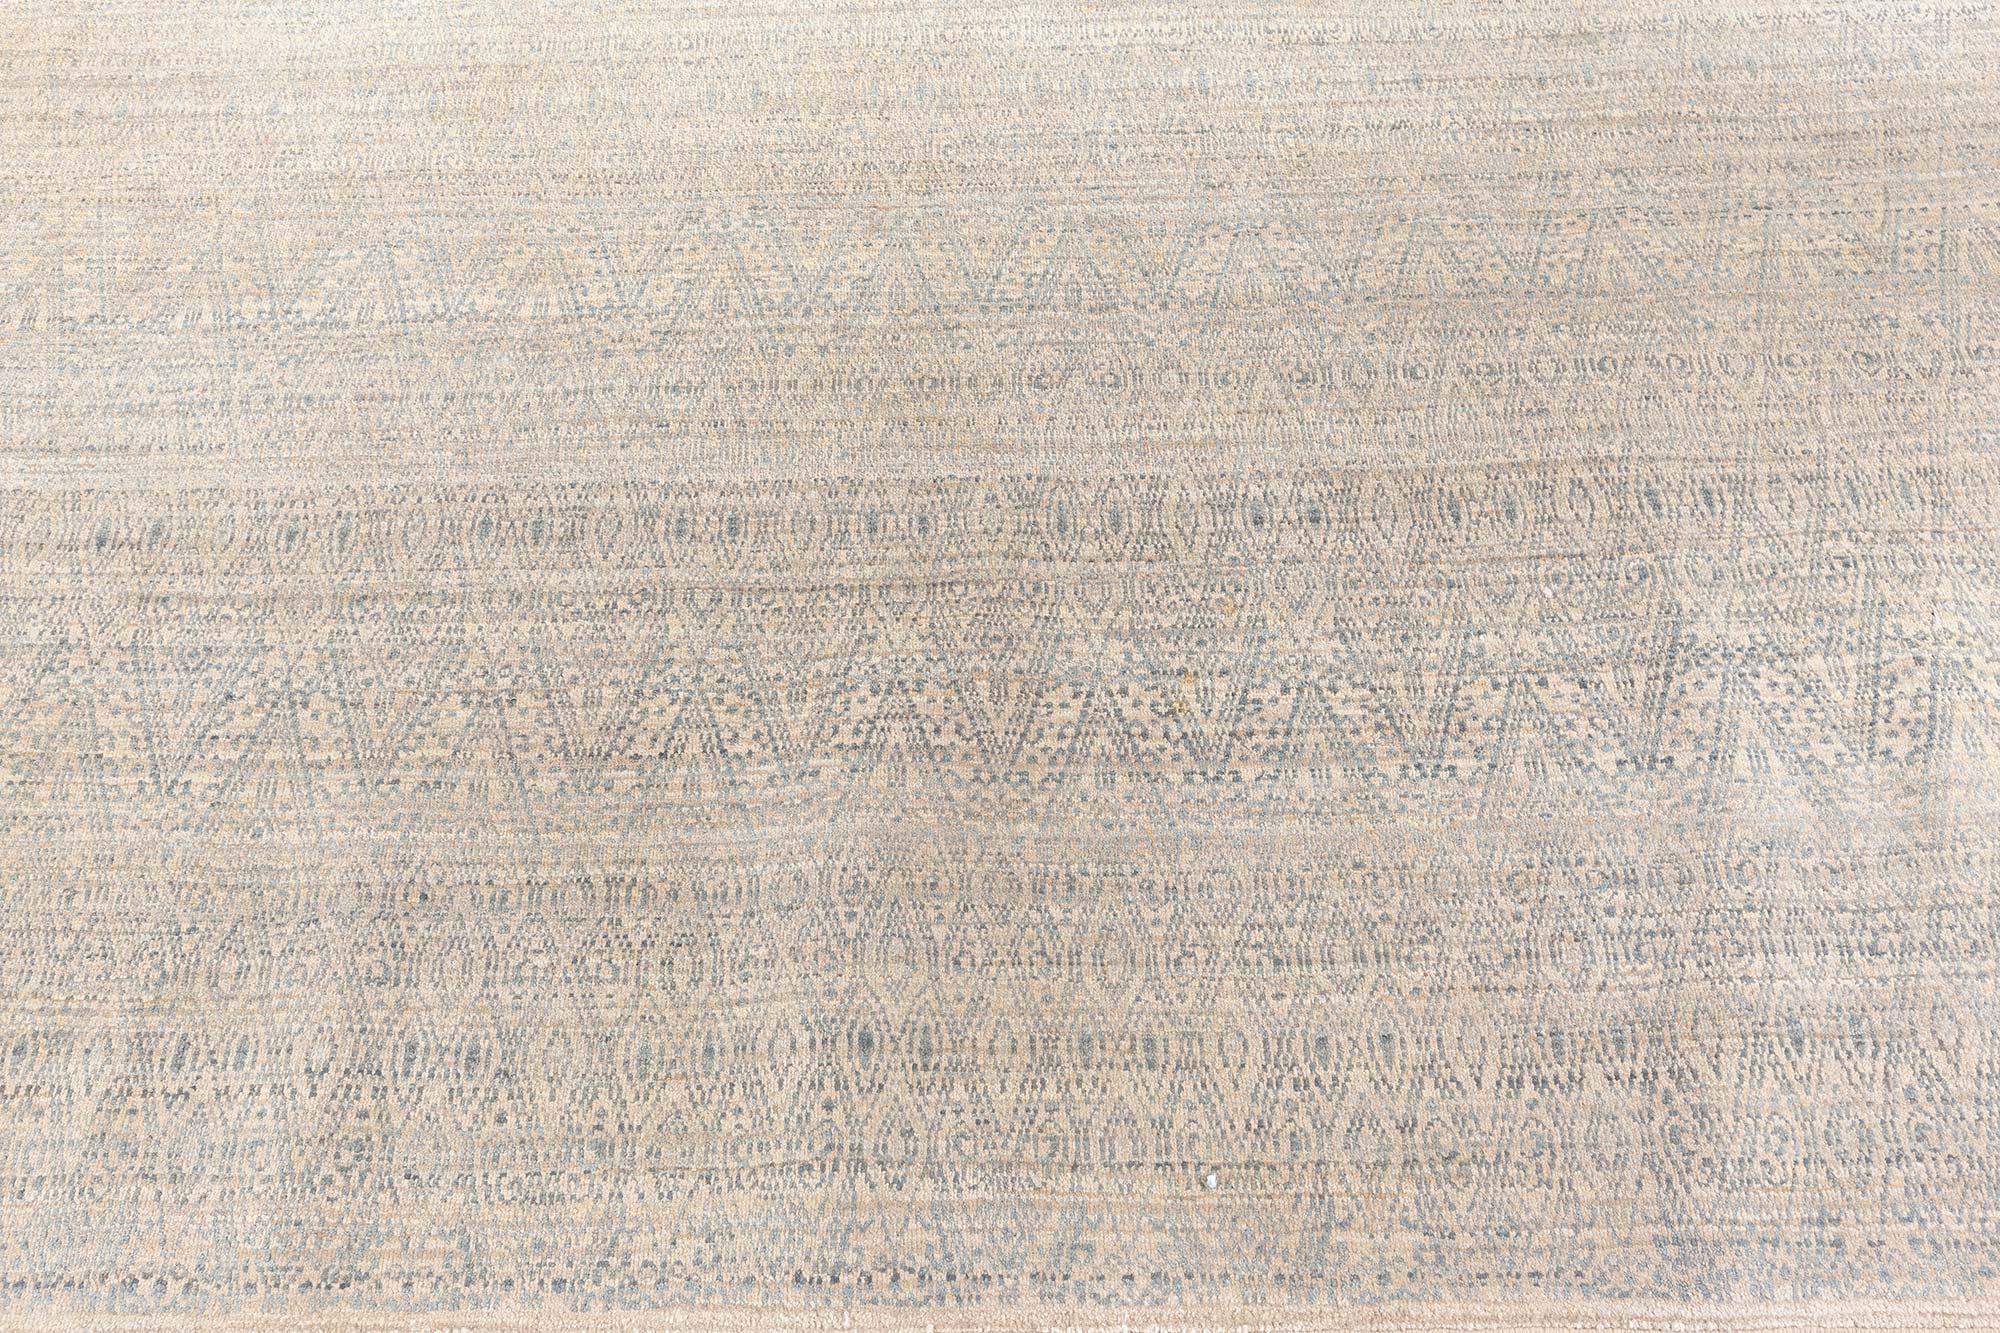 Modern traditional inspired handmade wool rug by Doris Leslie Blau.
Size: 5'5